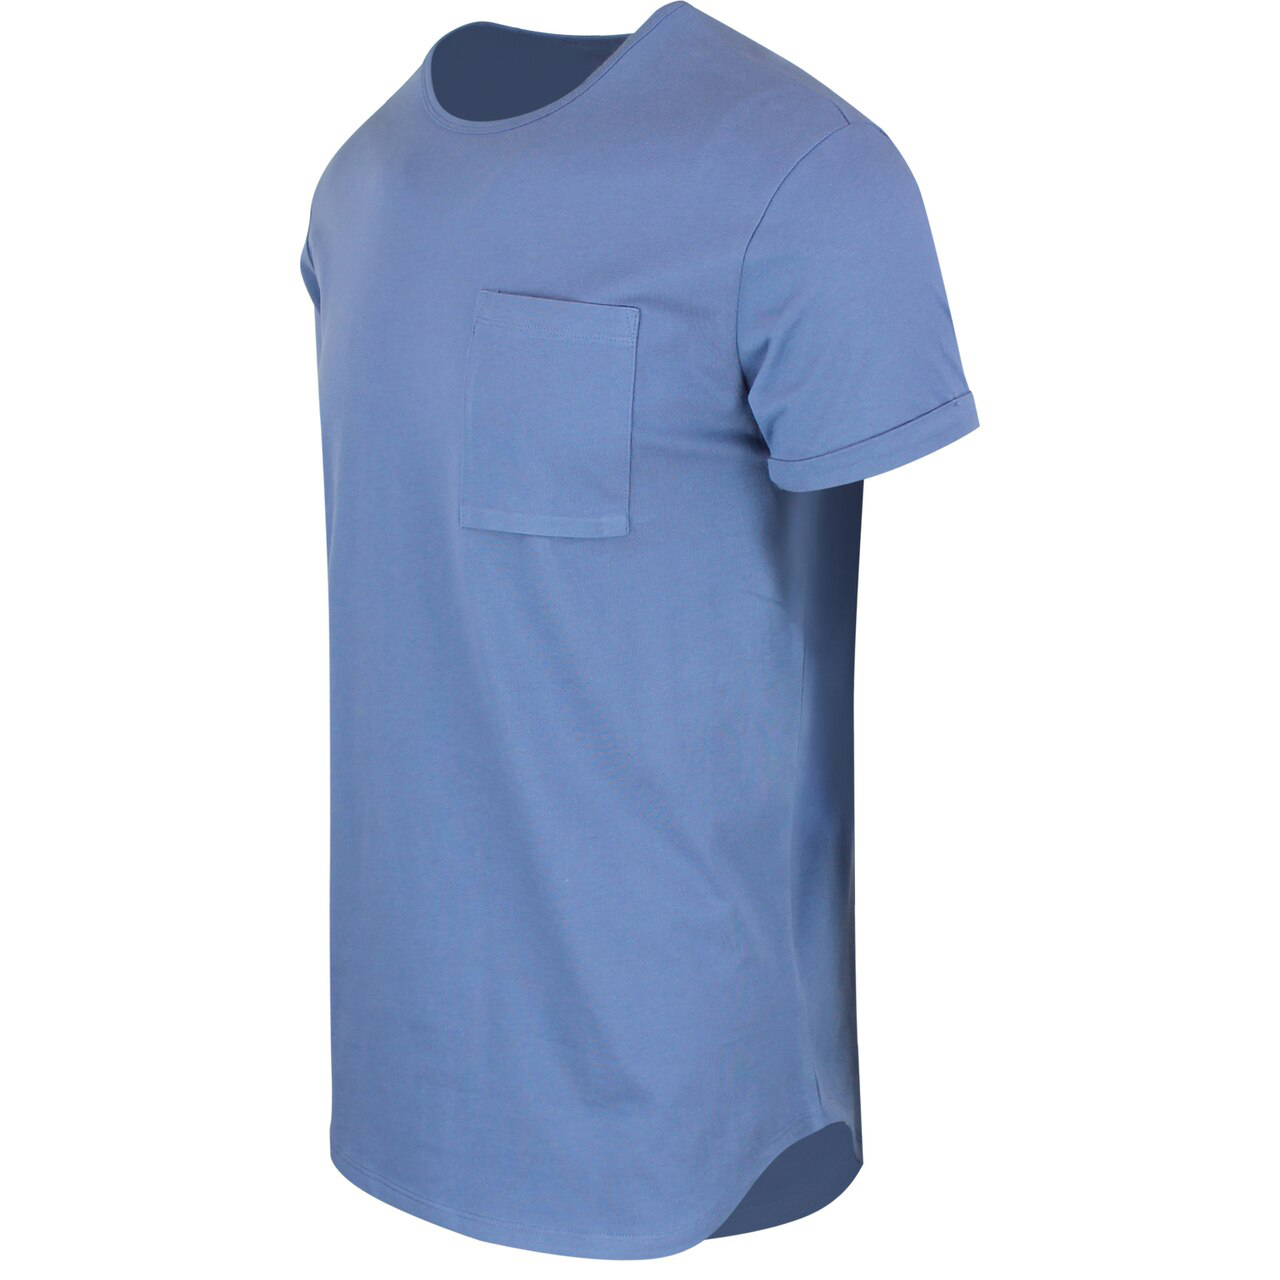 Half Sleeve Pocket Style T-Shirt